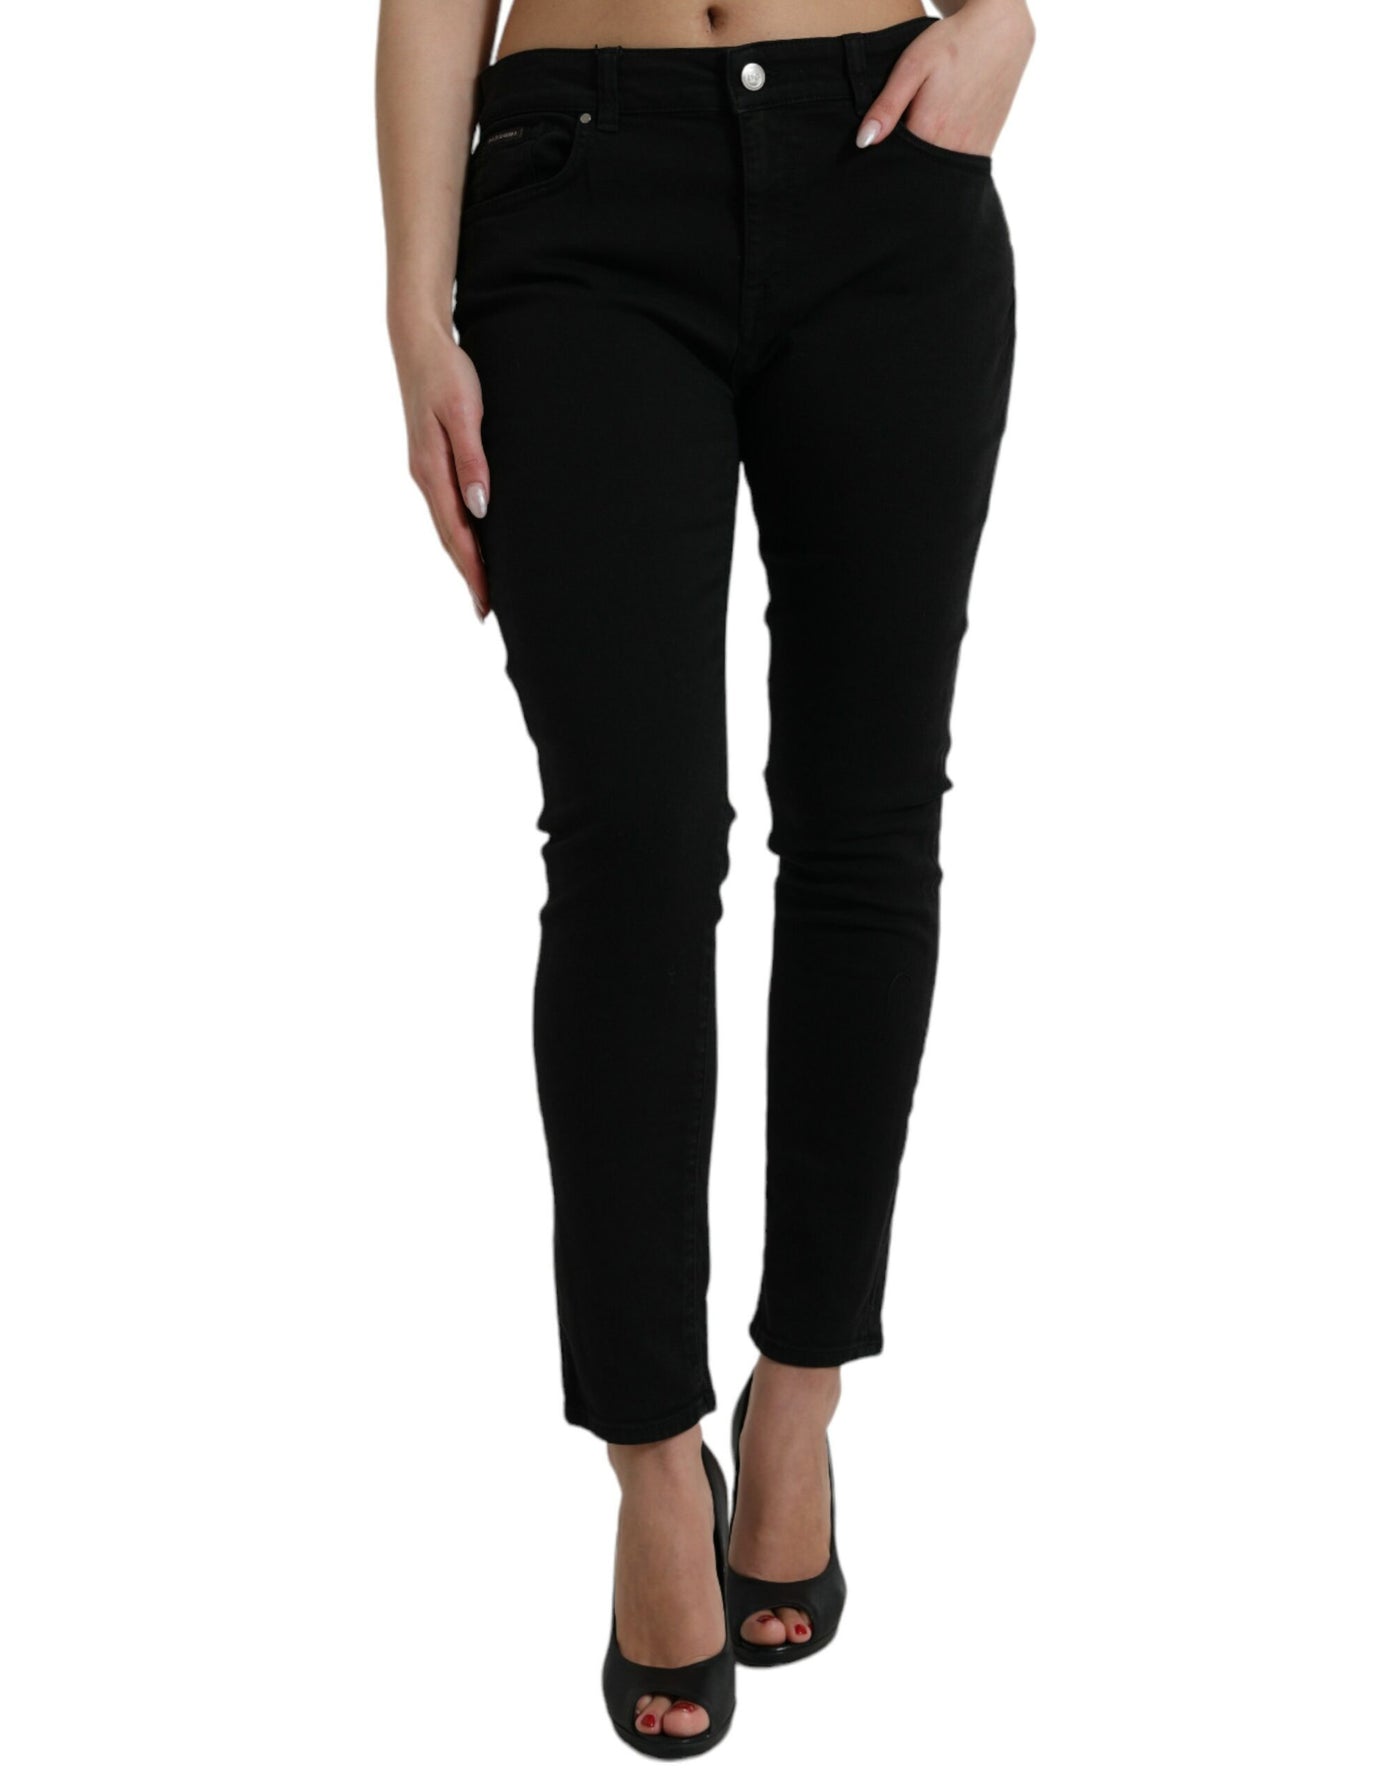 Dolce & Gabbana Jeans Skinny Black Cotton Stretch Denim Skinny Jeans